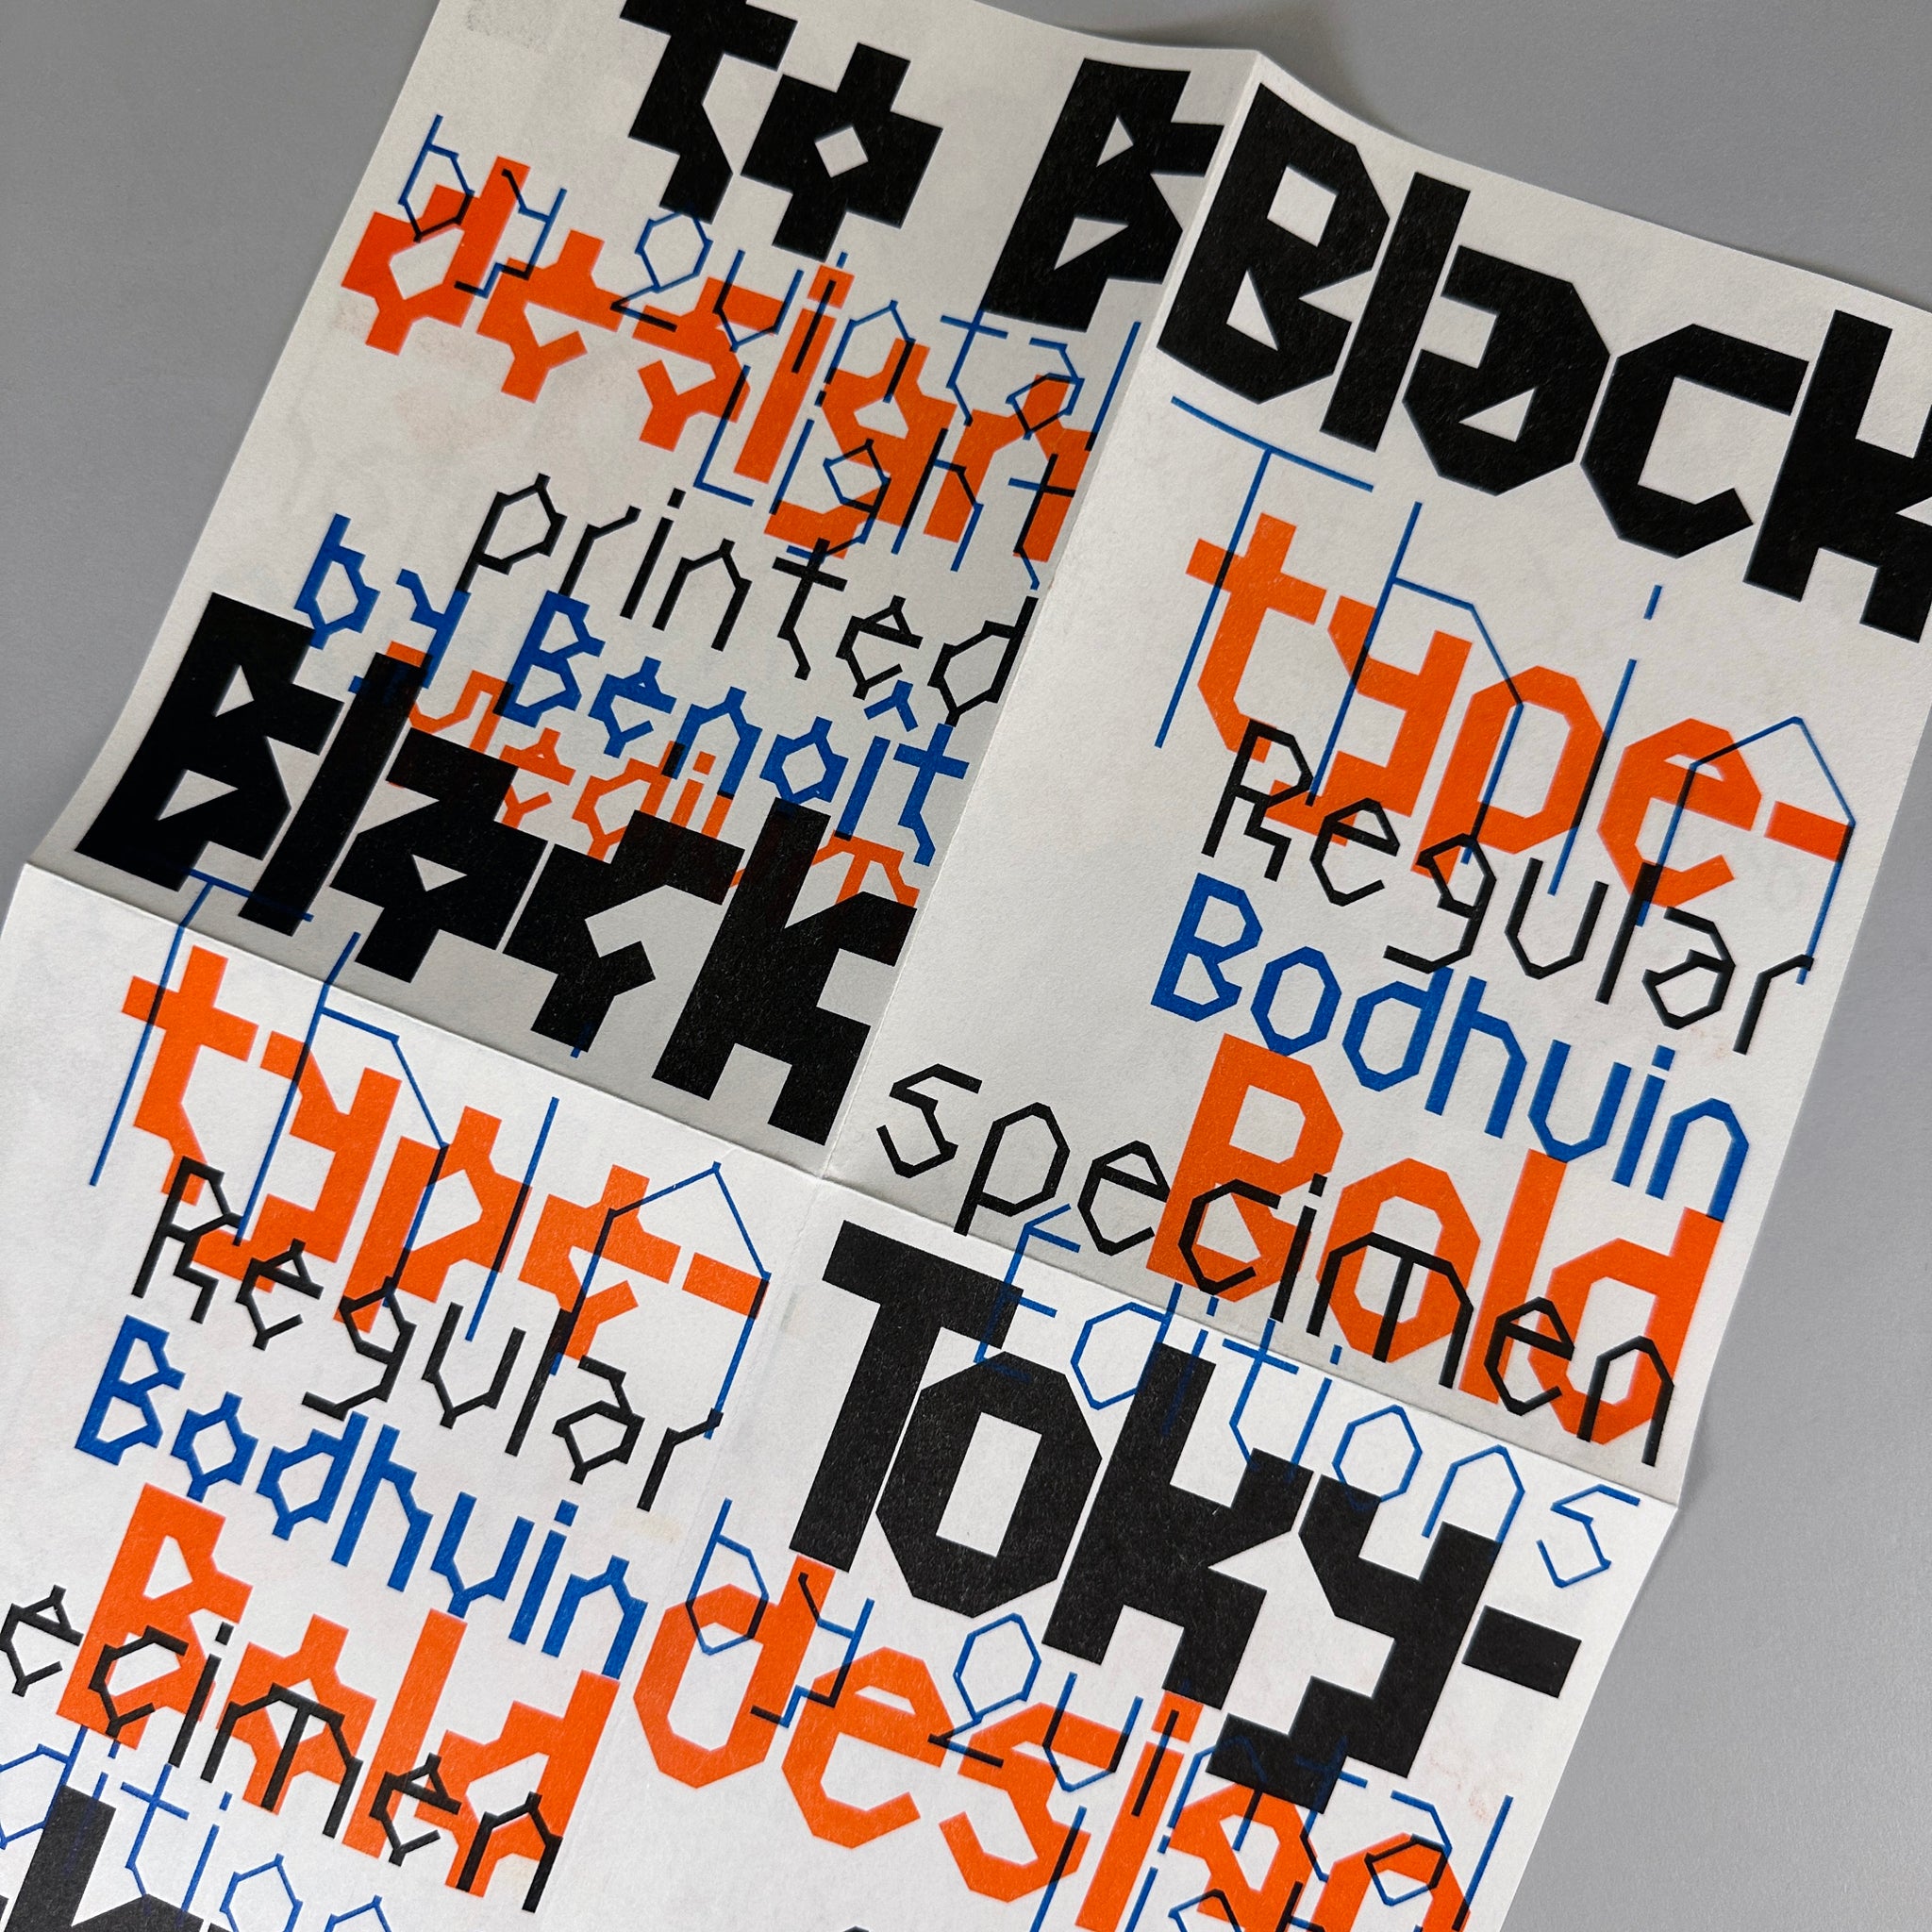 Tokyto Type Specimen / Benoît Bodhuin